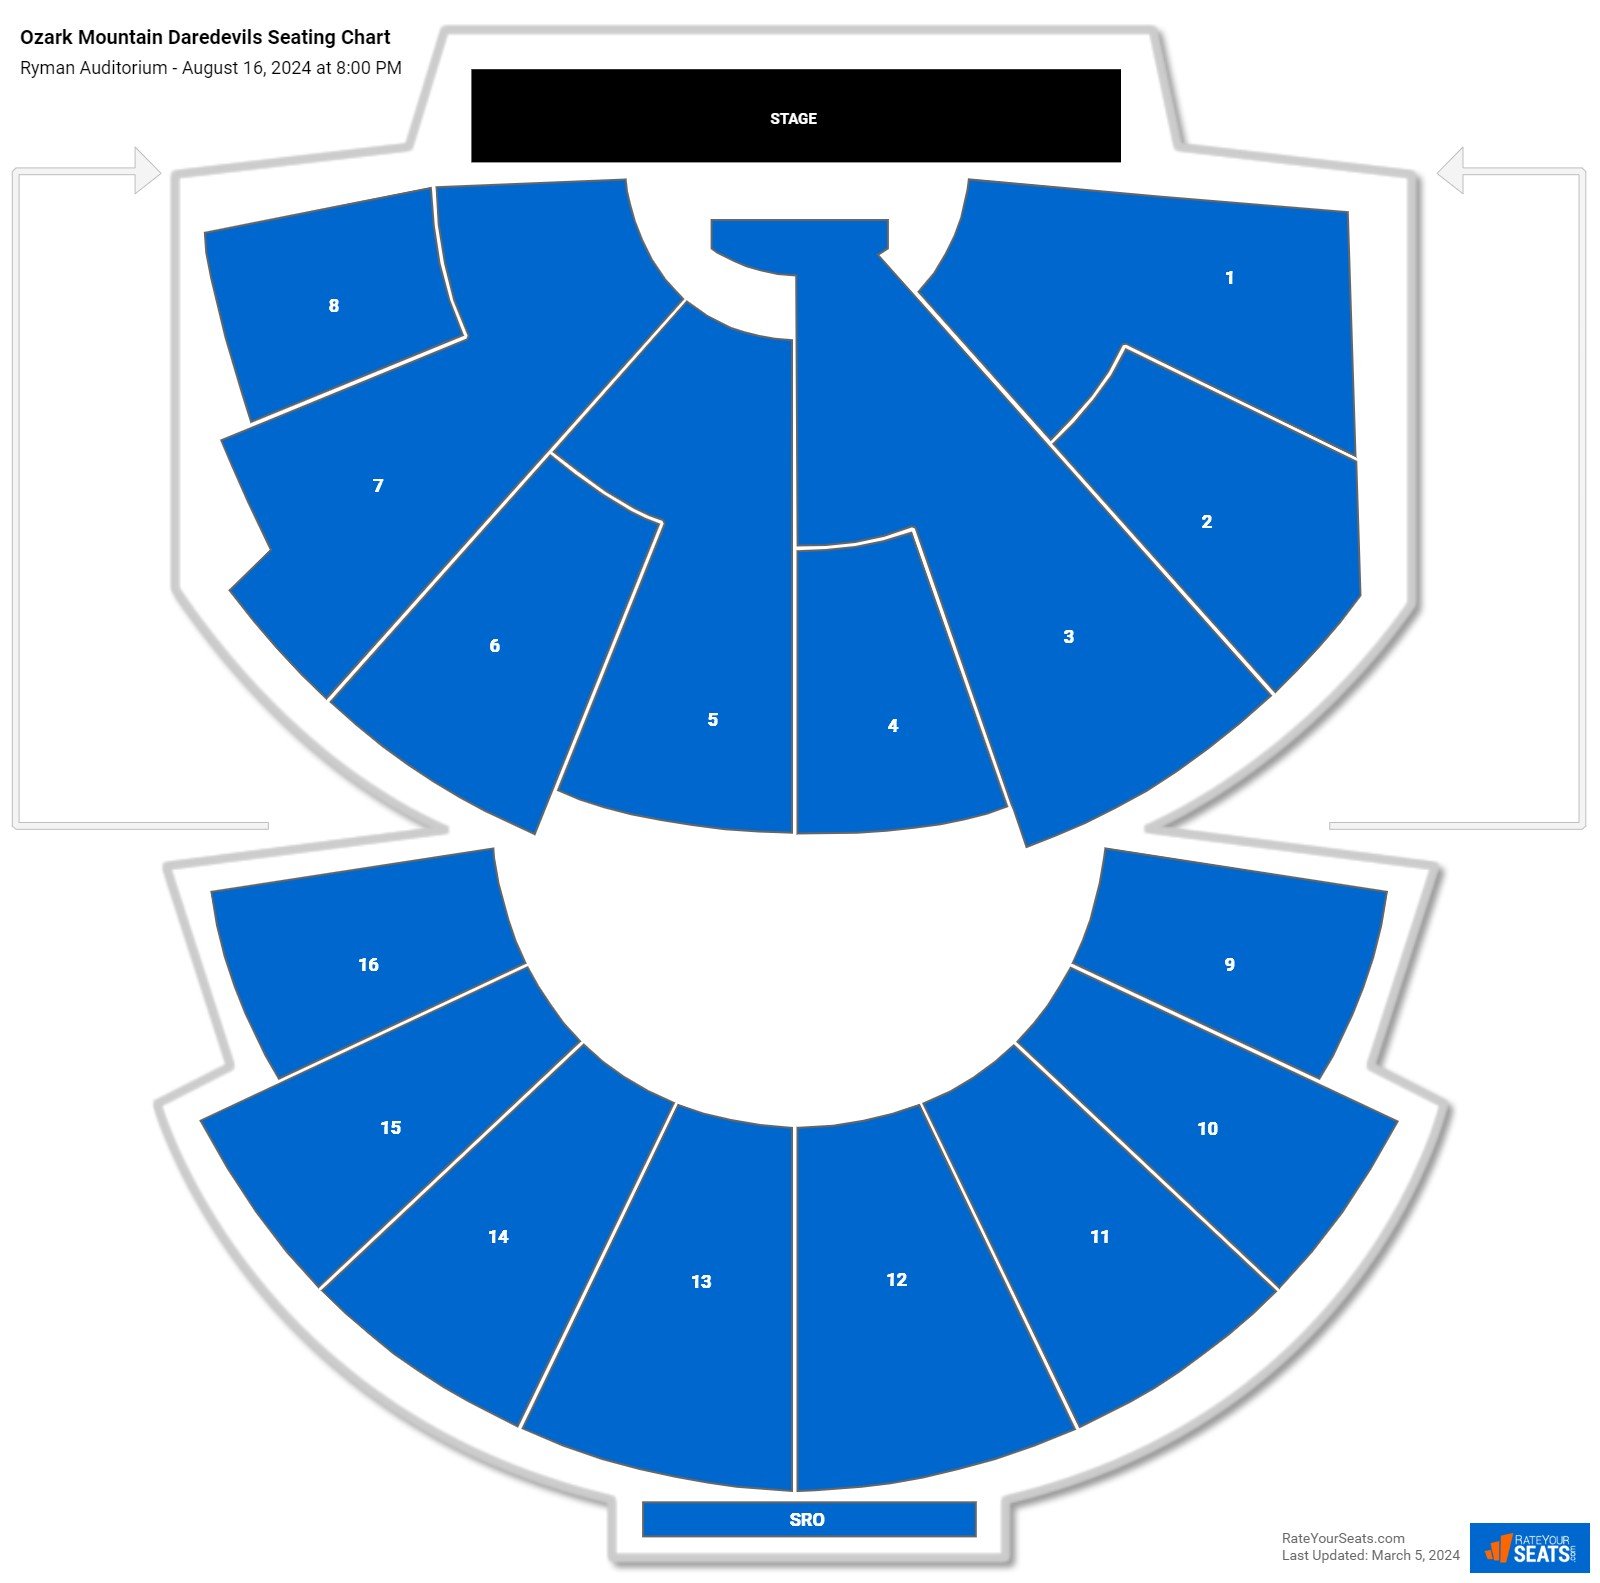 Ozark Mountain Daredevils seating chart Ryman Auditorium